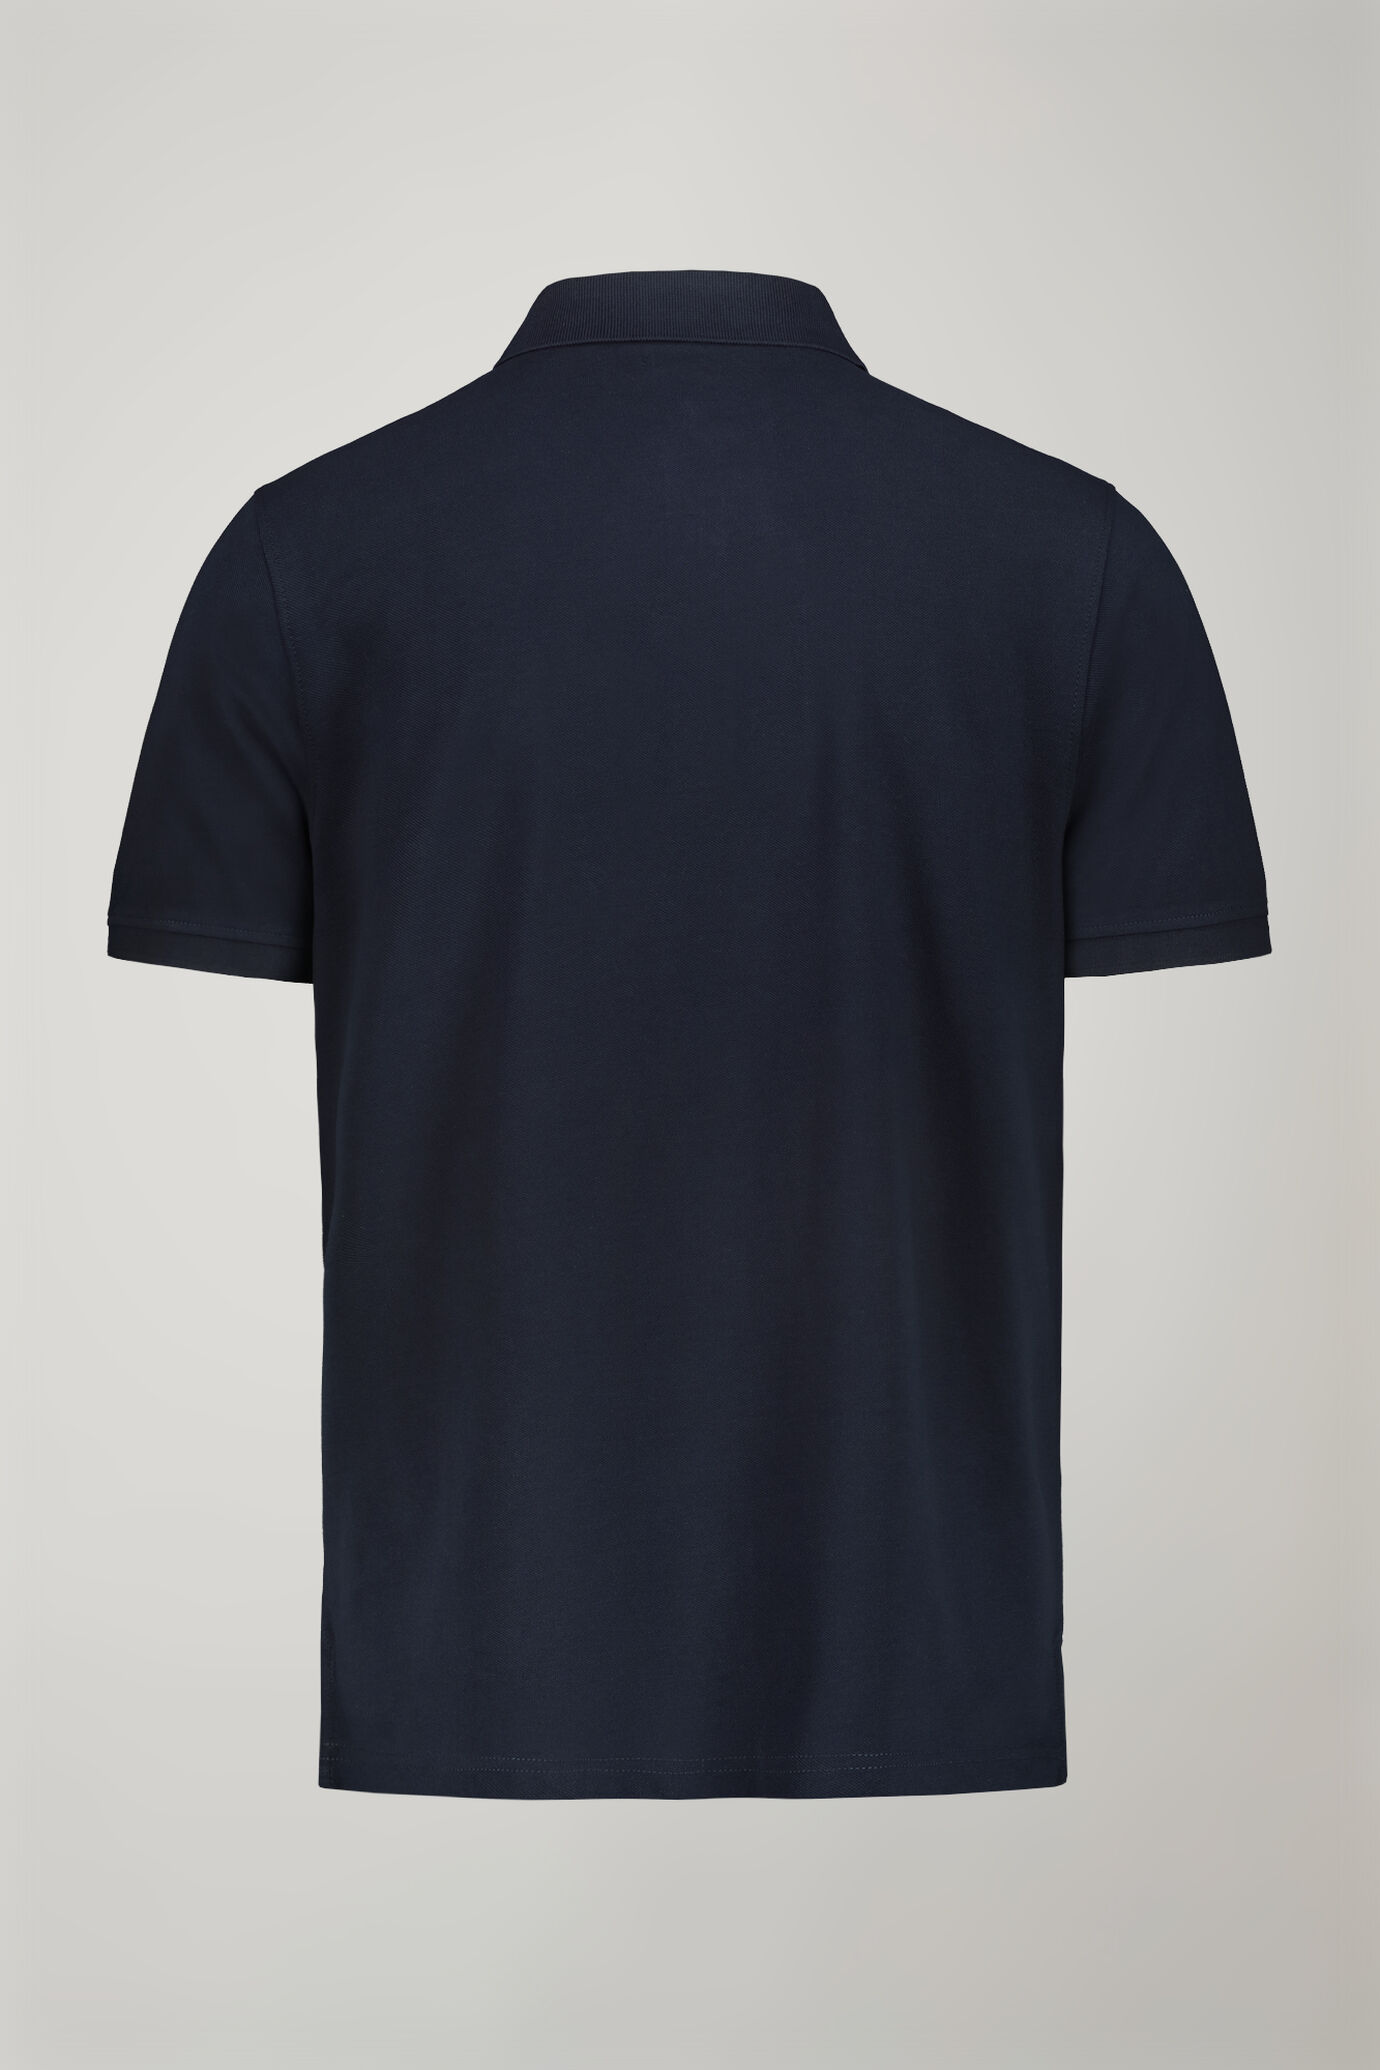 Kurzärmeliges Herren-Poloshirt aus 100 % Baumwolle in normaler Passform image number 5